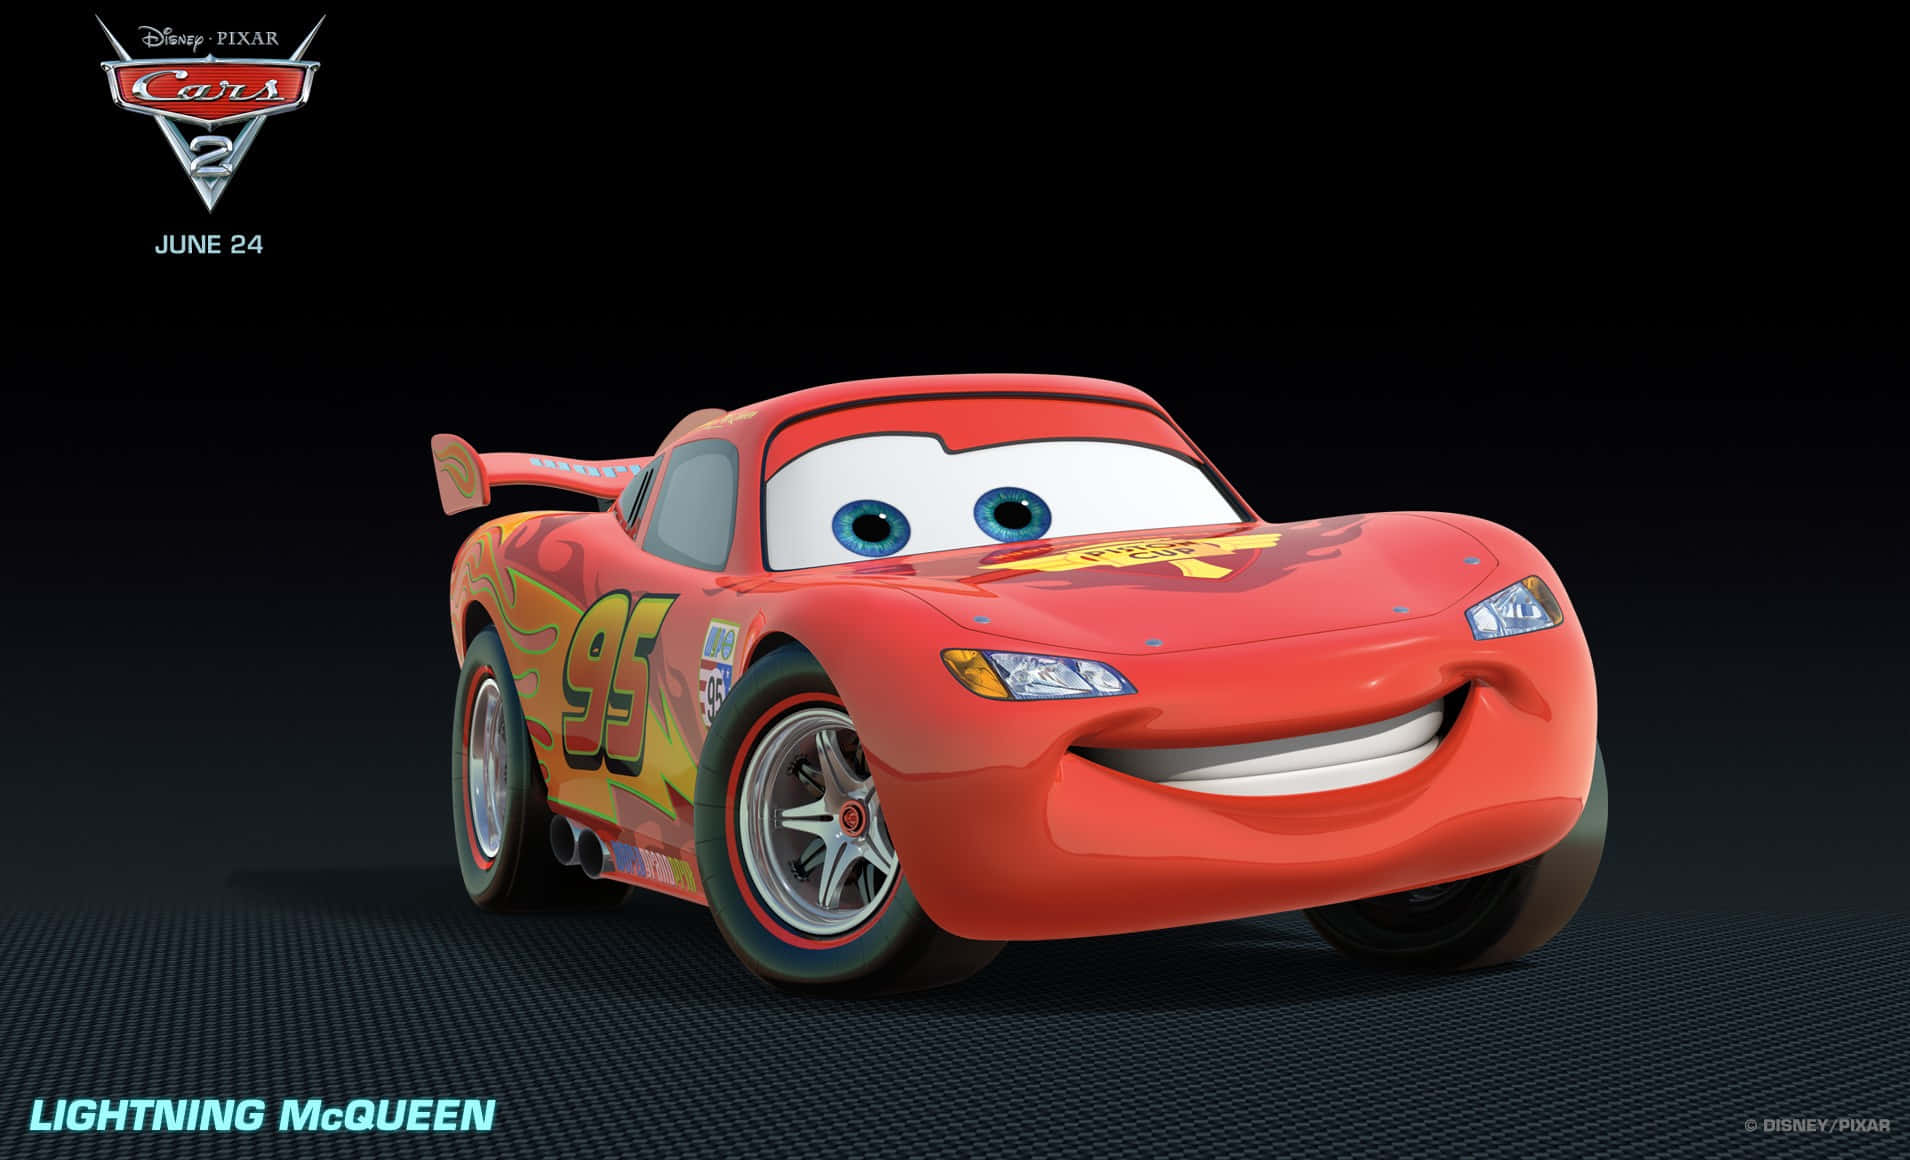 Lightning McQueen Racing Through the Track